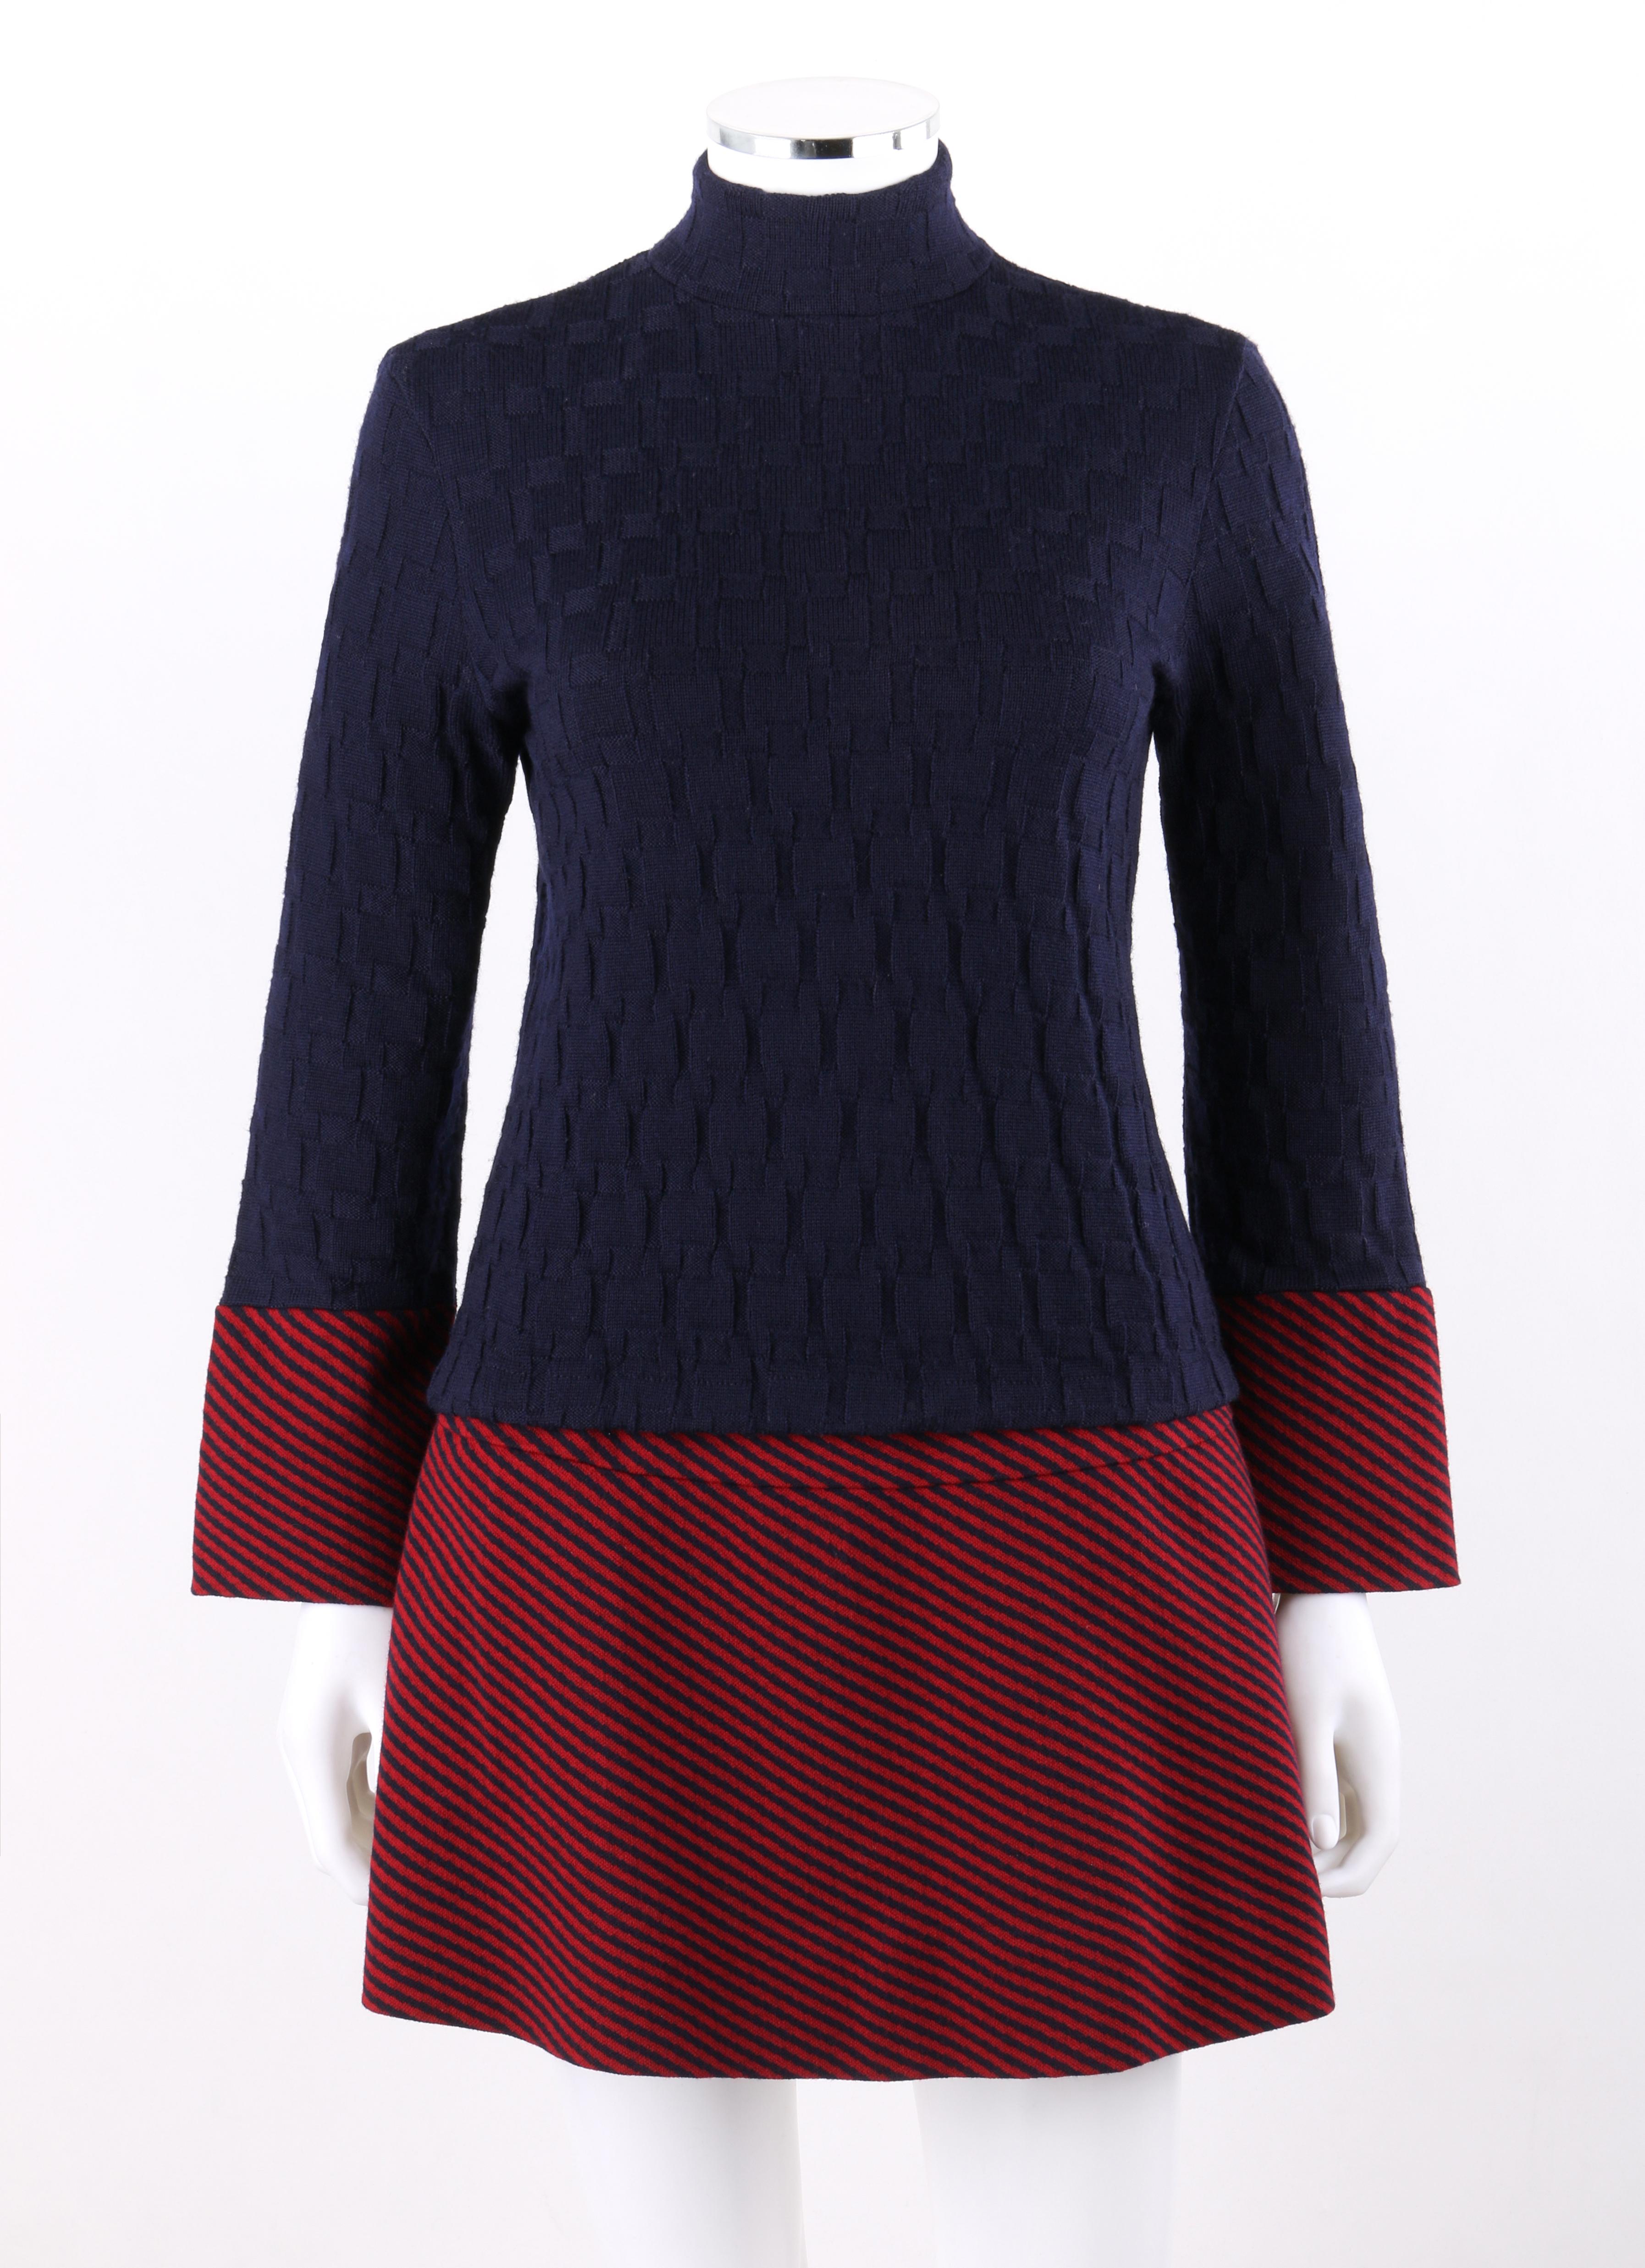 RUDI GERNREICH Harmon Knitwear c.1960's 2pc Raised Knit Solid / Stripe Sweater Skirt Set
 
Circa: 1960’s
Label(s): Rudi Gernreich for Harmon Knitwear
Designer: Rudi Gernreich
Style: Two-piece sweater & skirt set
Color(s): Shades of dark blue & red